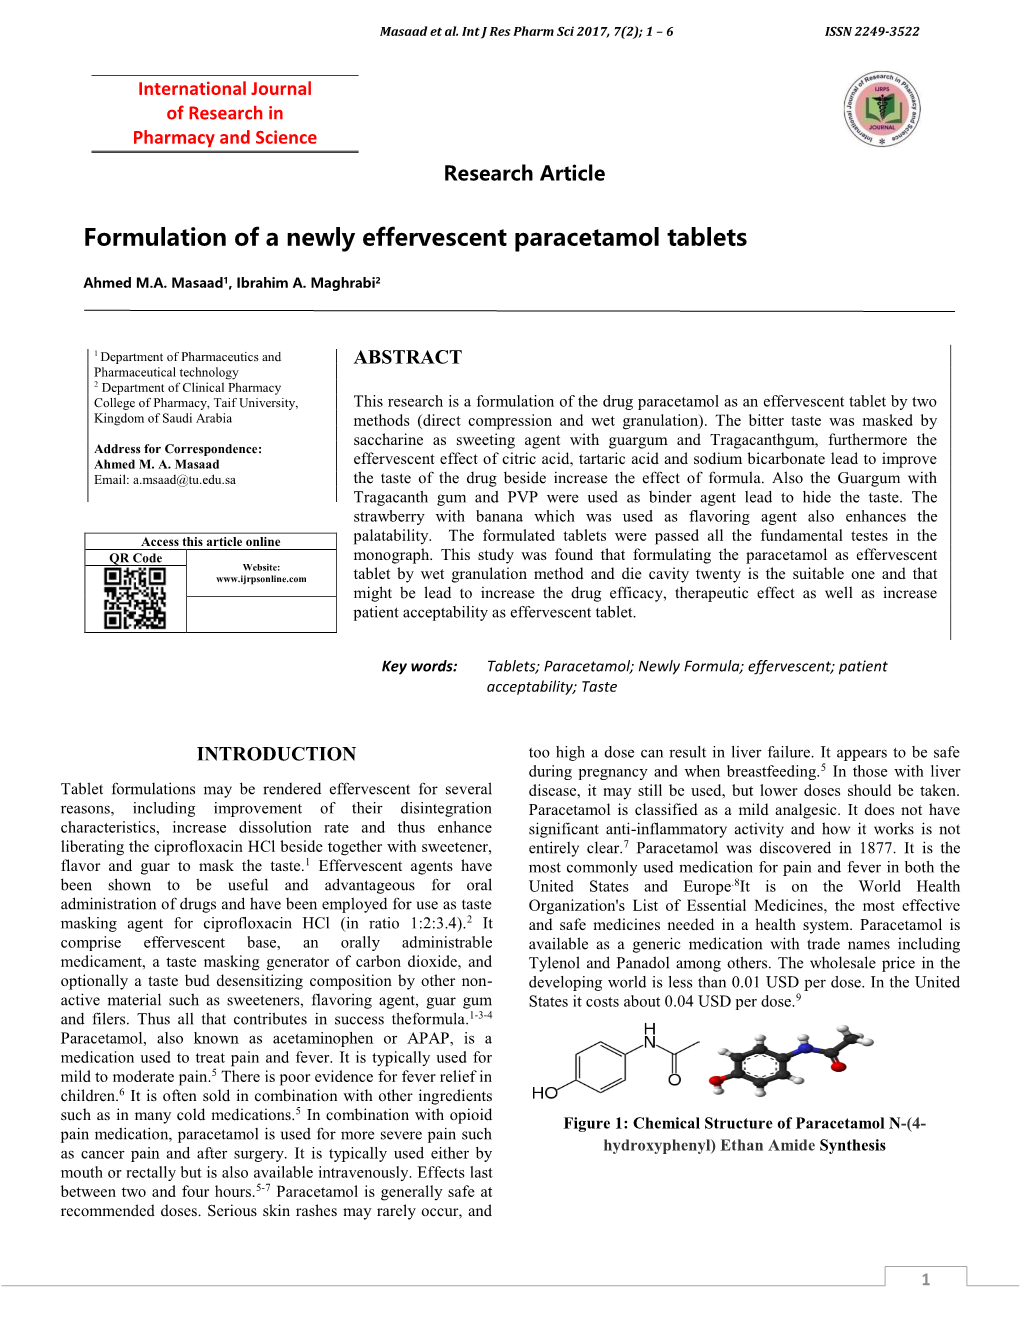 Formulation of a Newly Effervescent Paracetamol Tablets